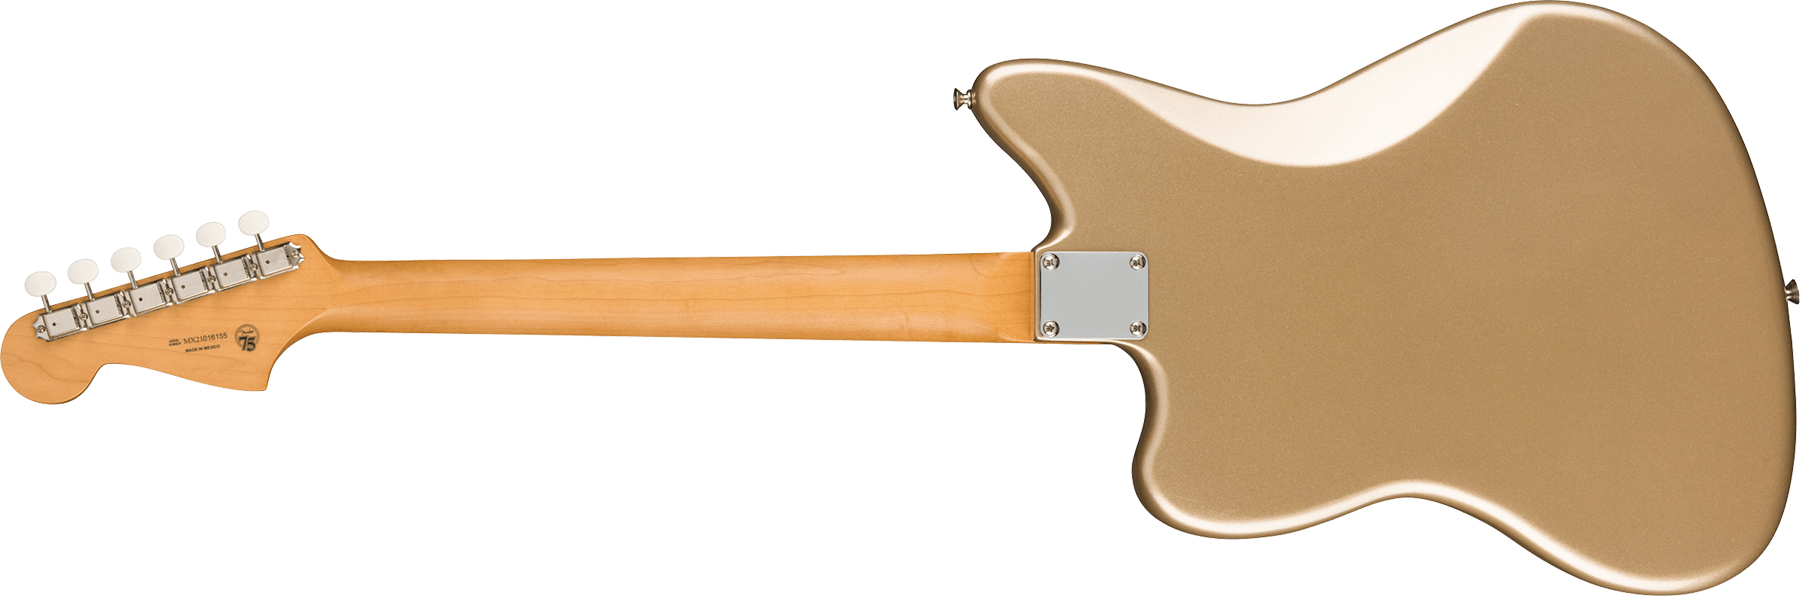 Fender Jazzmaster Gold Foil Ltd Mex 3mh Trem Bigsby Eb - Shoreline Gold - Guitarra electrica retro rock - Variation 1